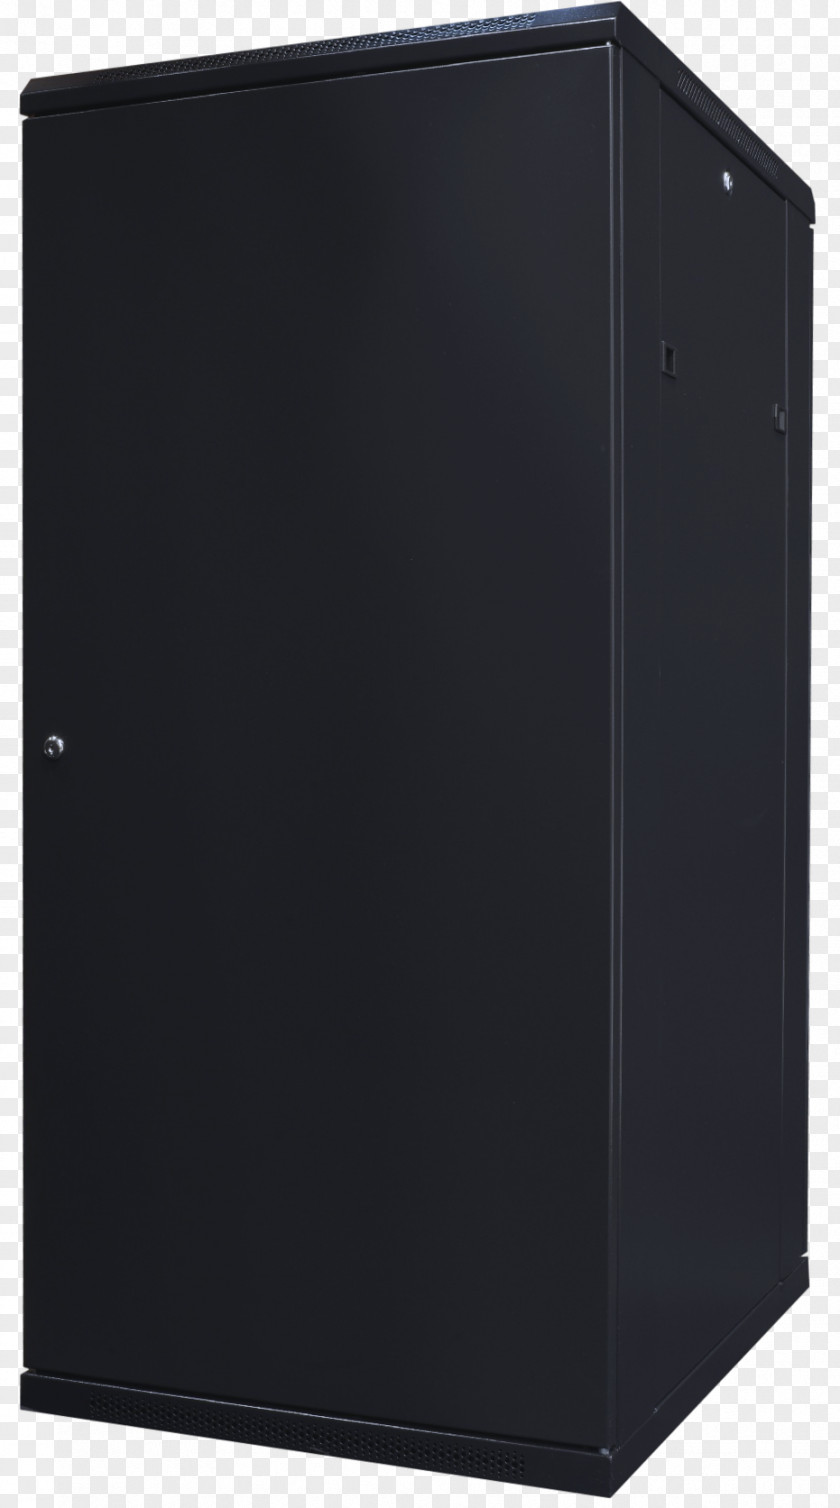 Refrigerator Danby Designer DAR110A2 Home Appliance Picture Frames PNG